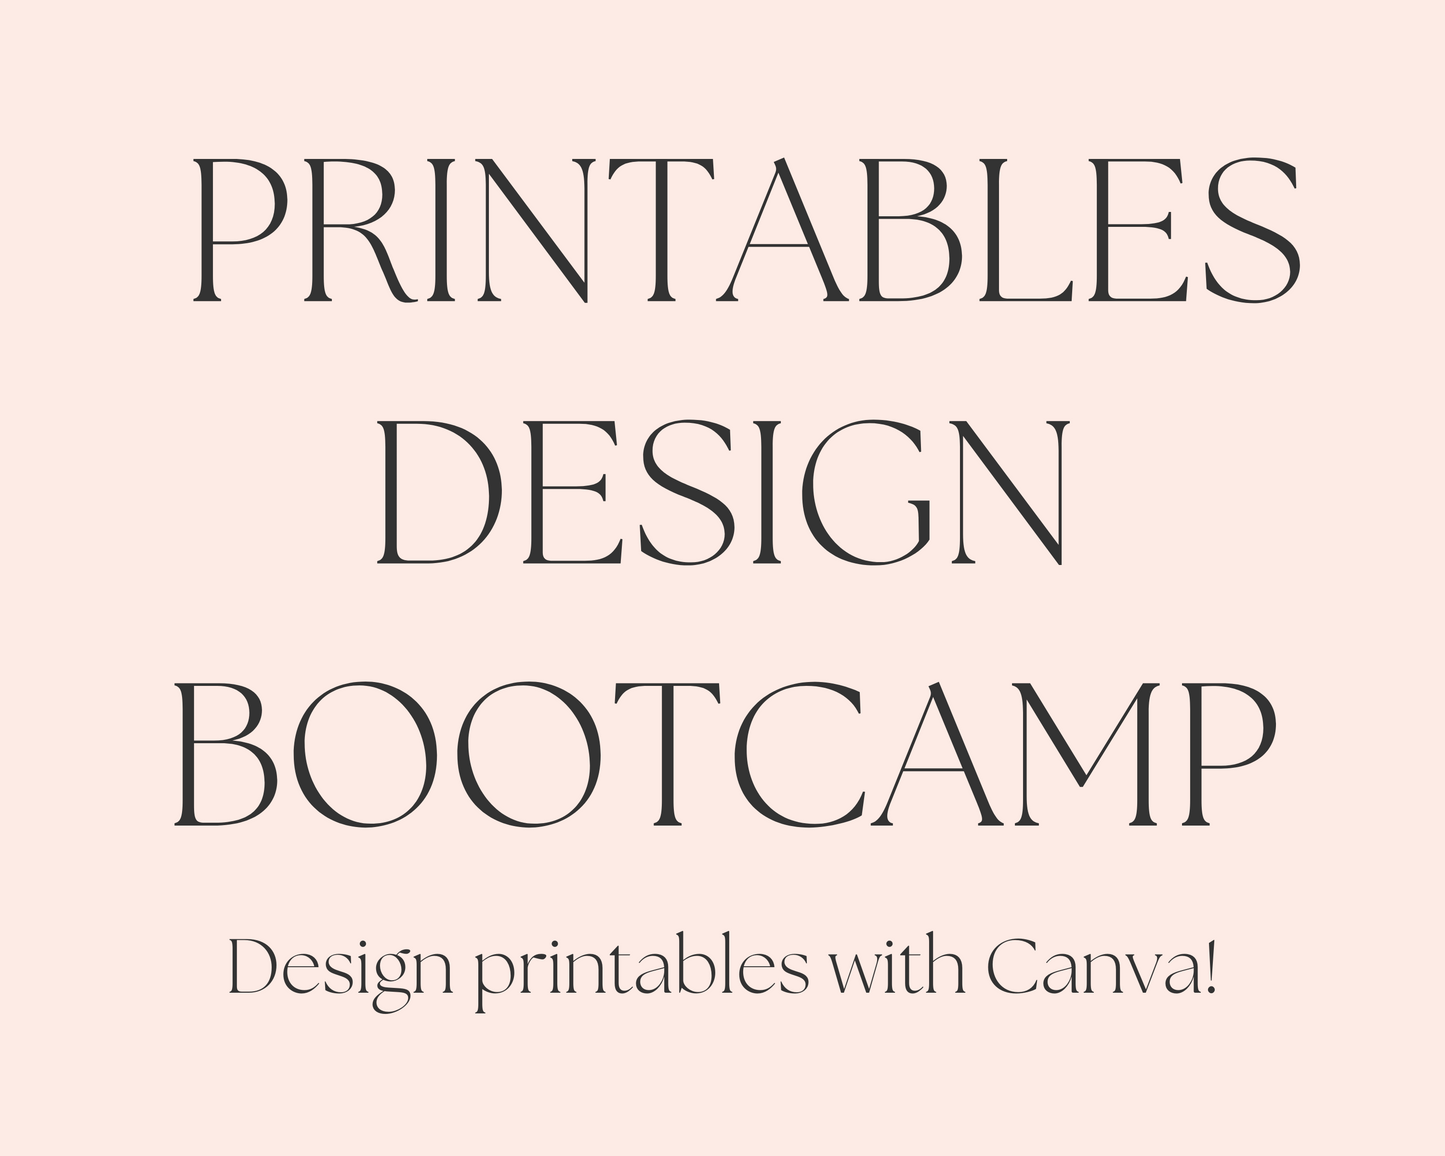 Printables Design Bootcamp